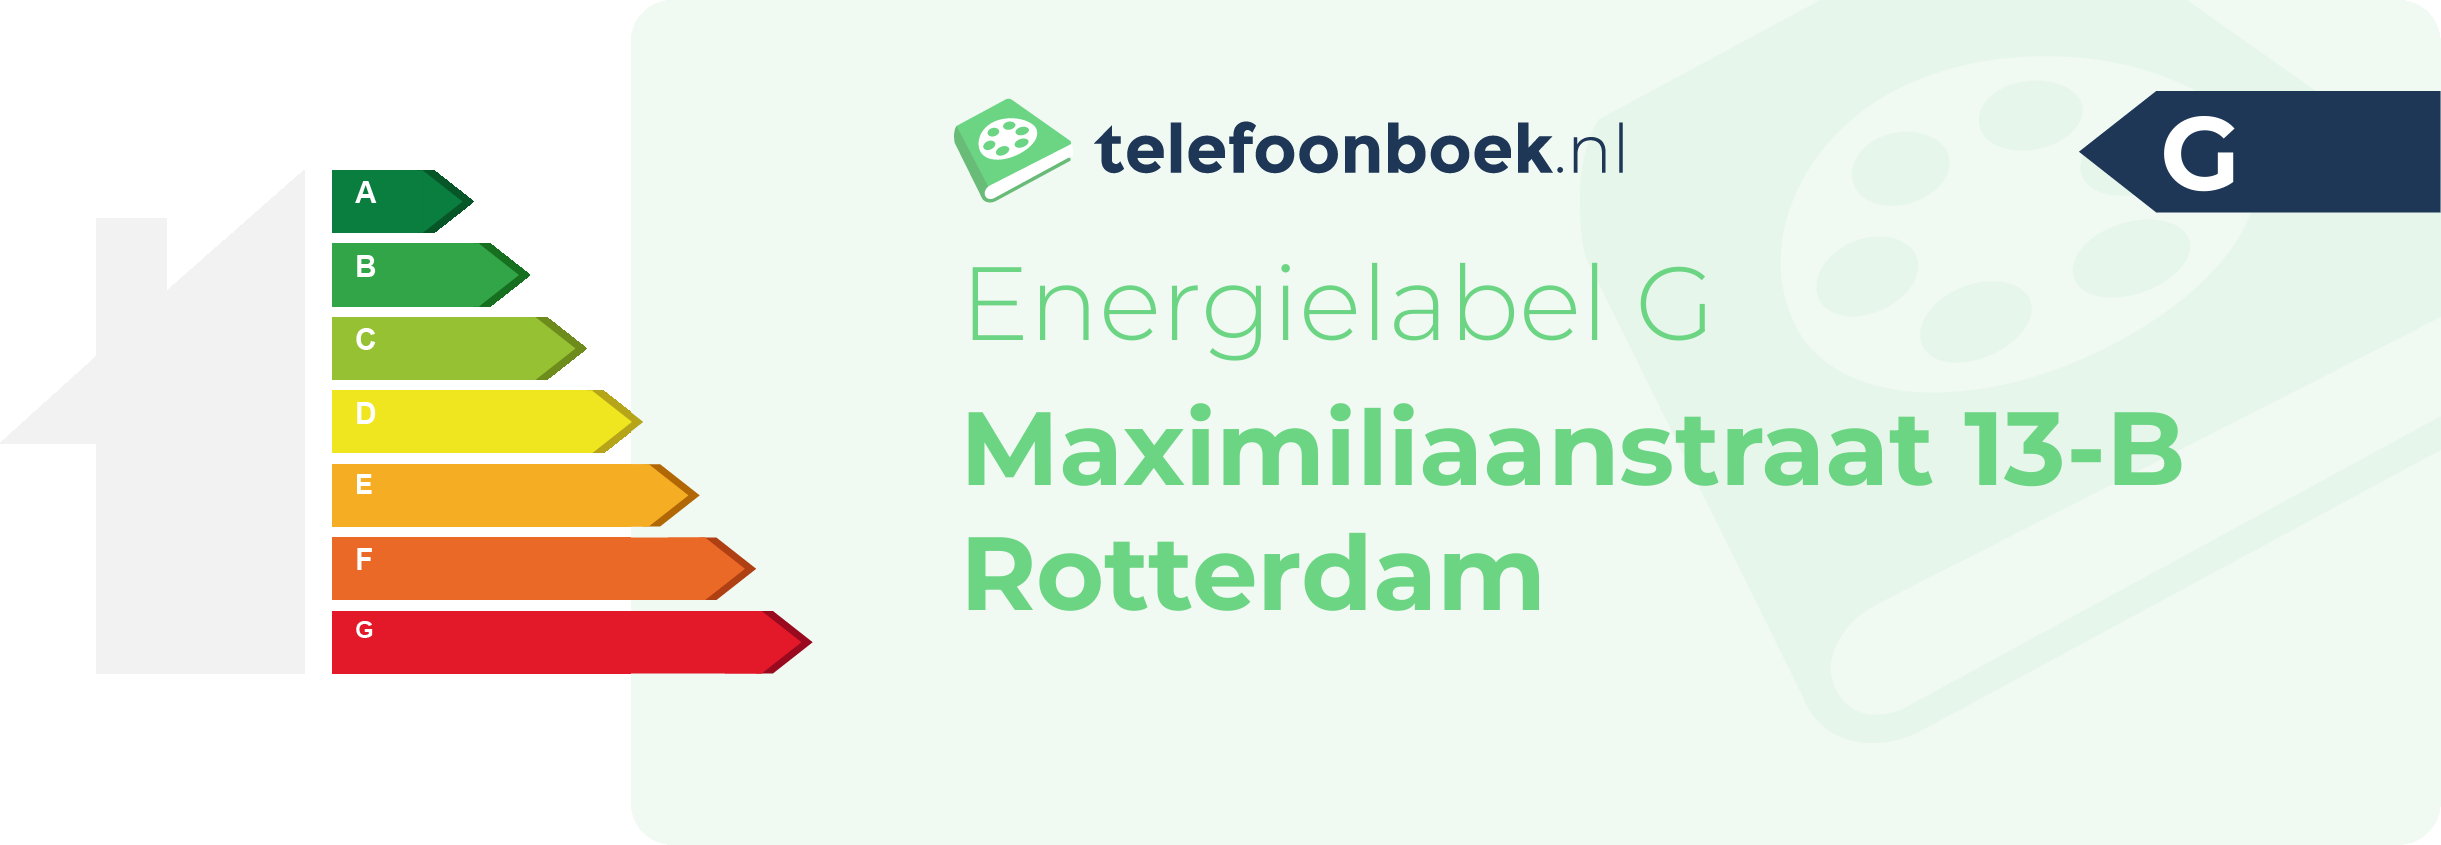 Energielabel Maximiliaanstraat 13-B Rotterdam